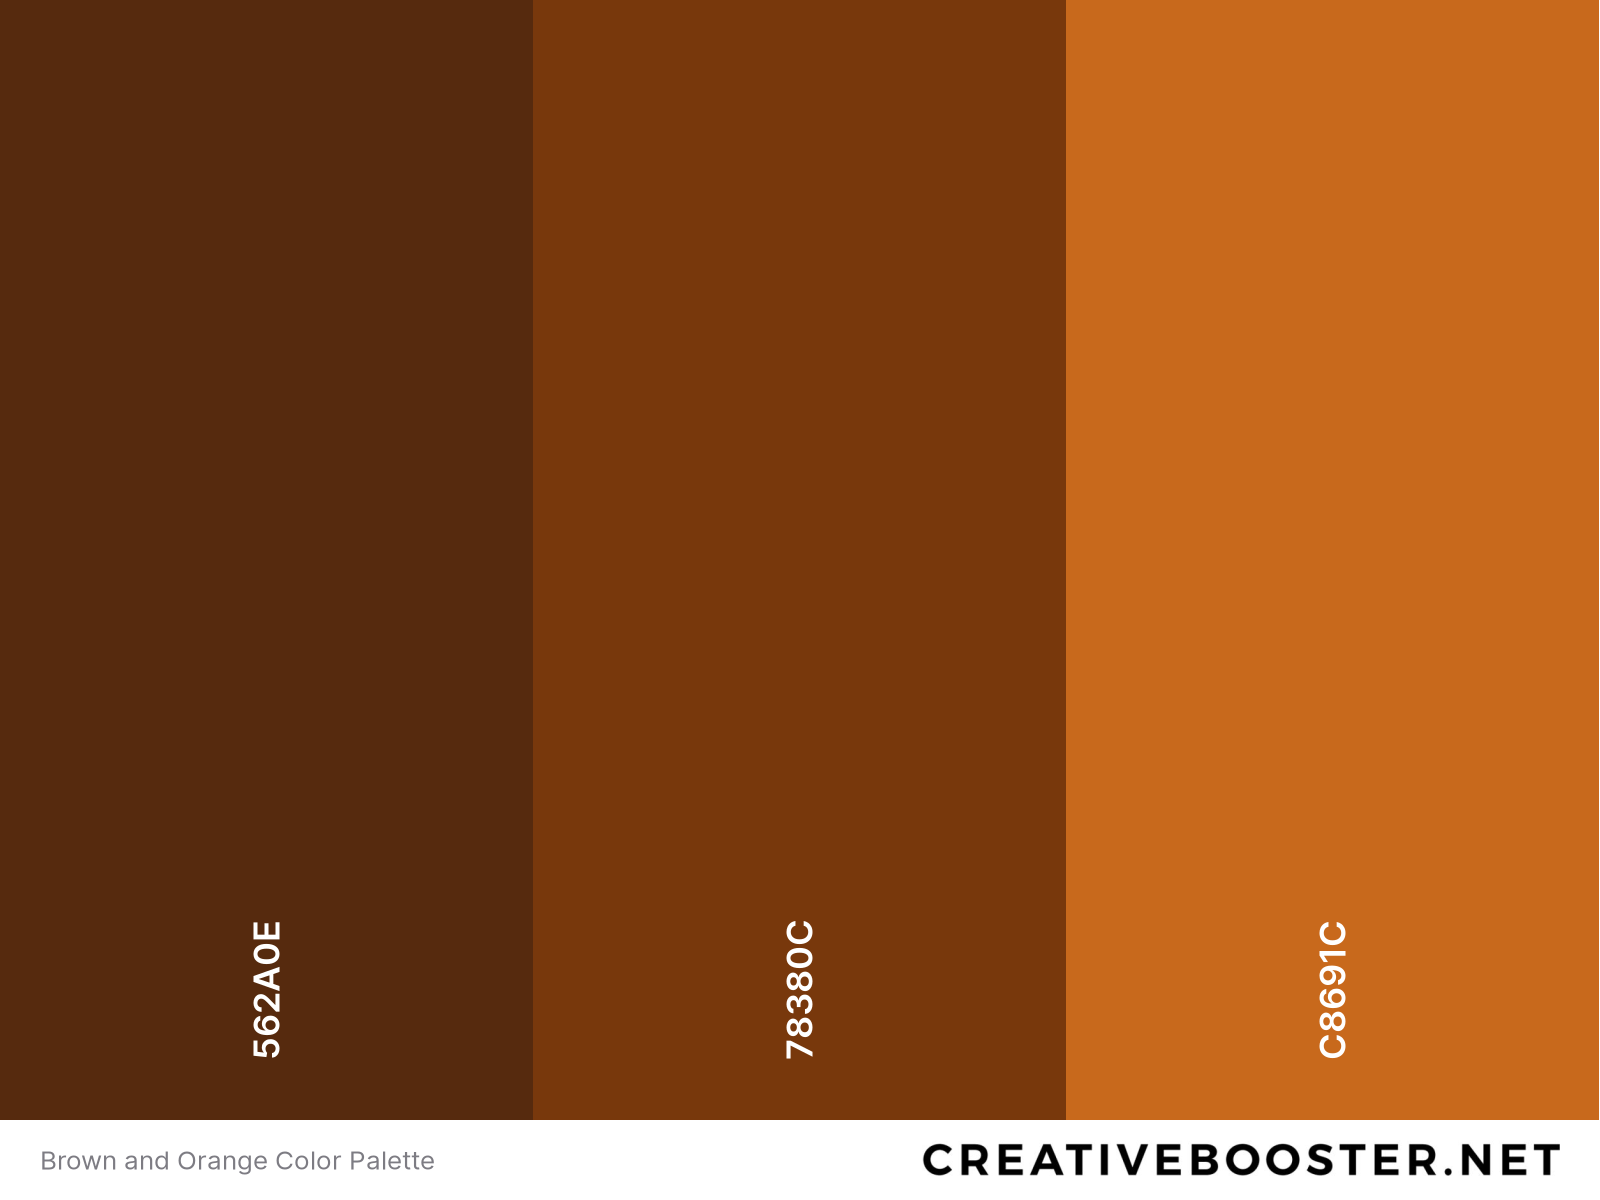 Brown and Orange Color Palette